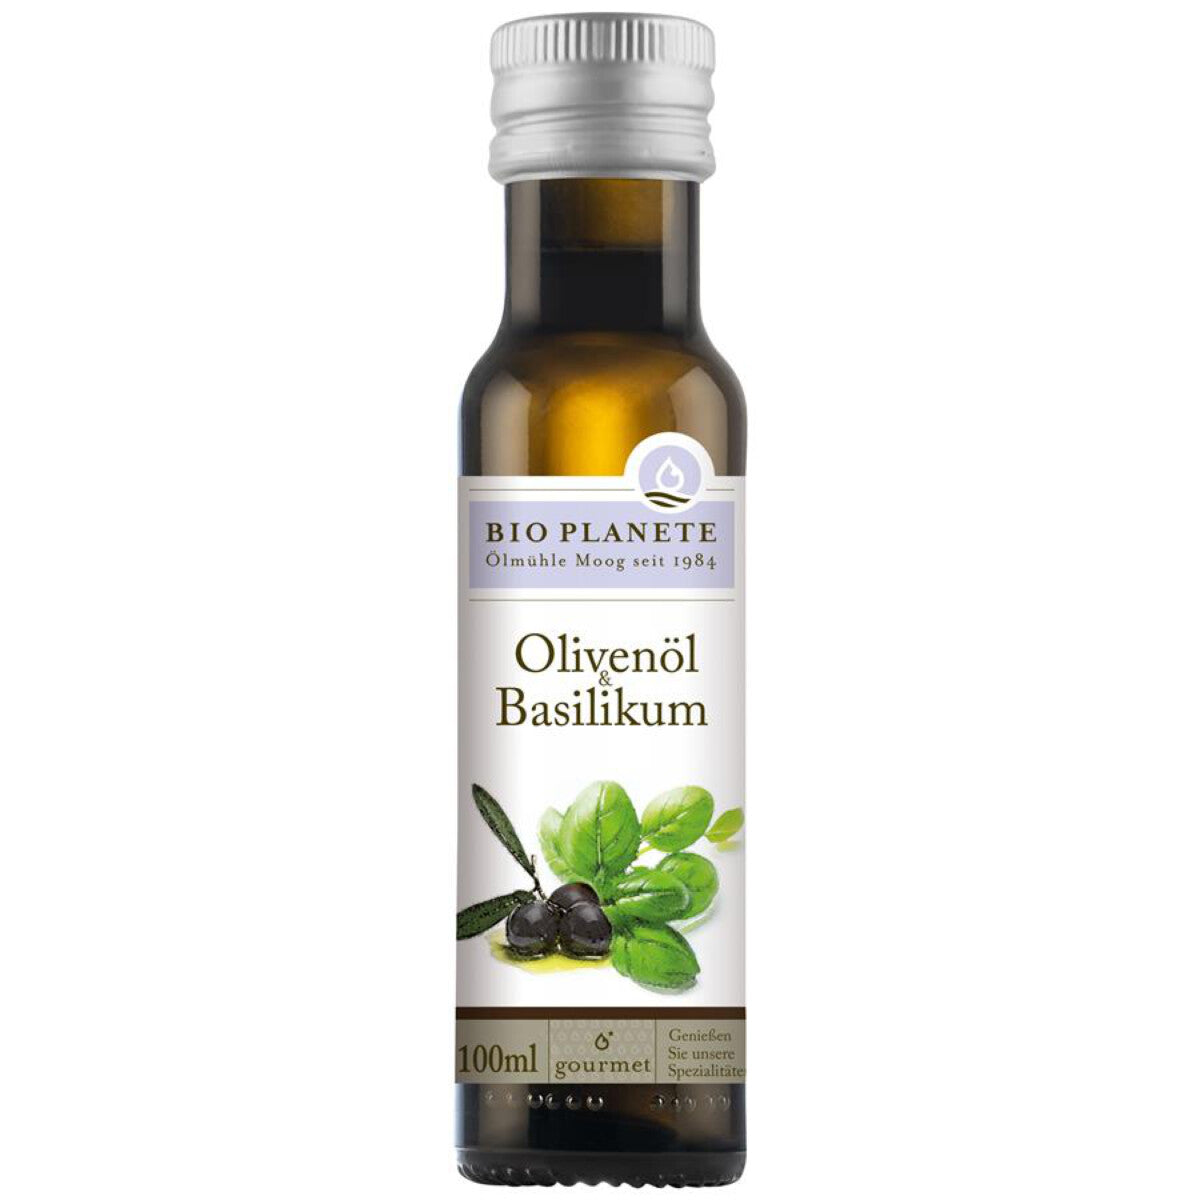 BIO PLANETE Olivenöl & Basilikum - 0,1 l